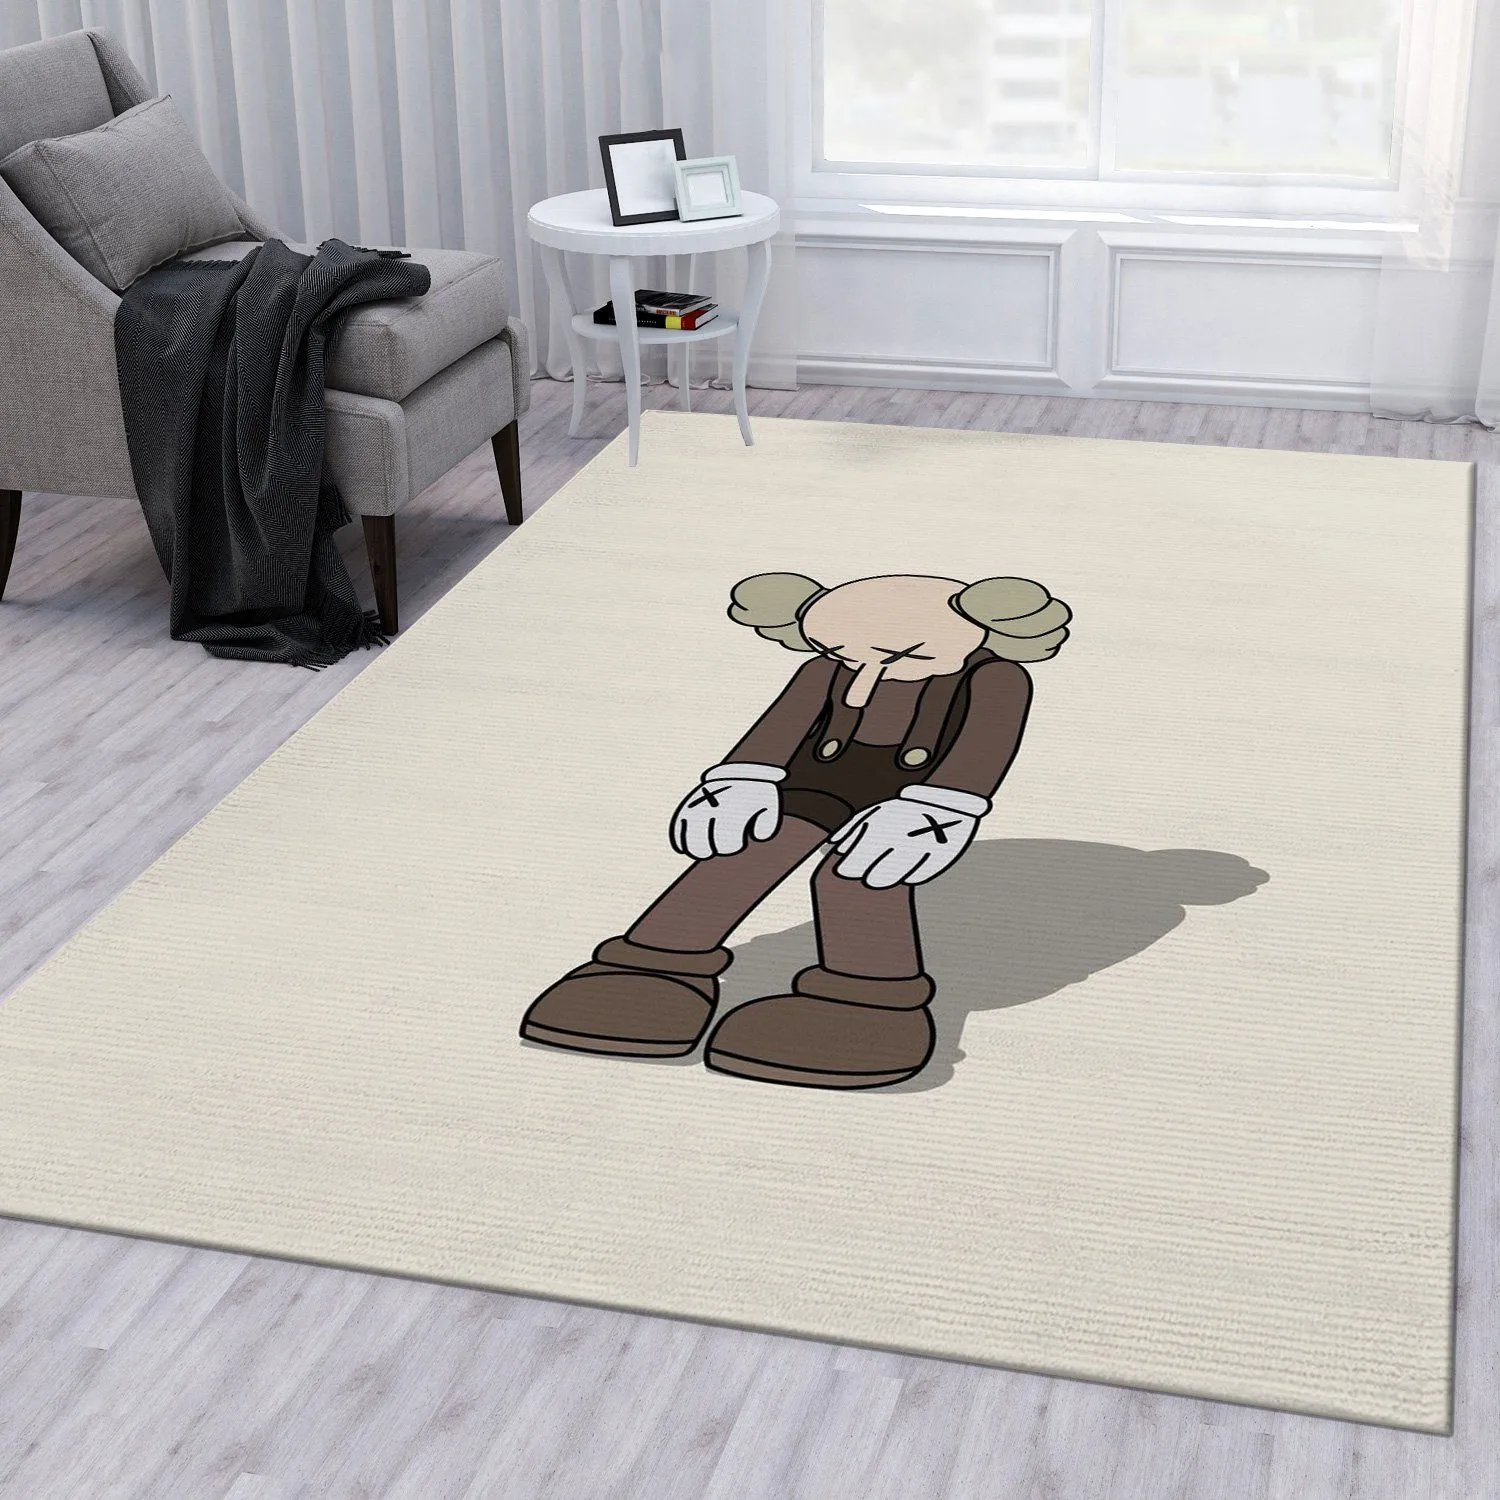 Kaws Small Lie Figure Rectangle Rug Fashion Brand Area Carpet Door Mat Luxury Home Decor